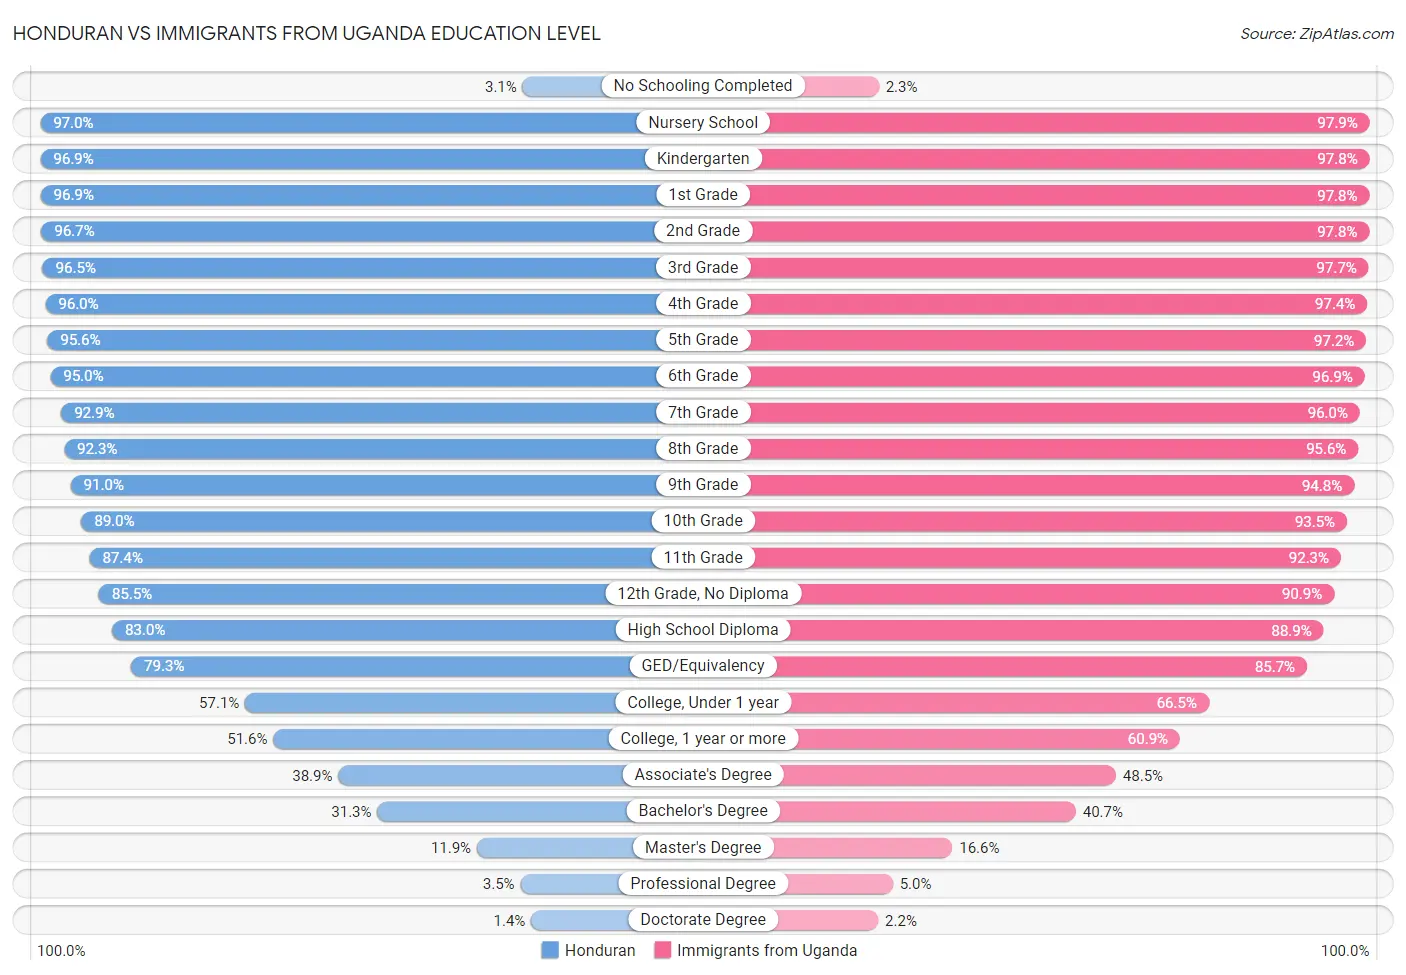 Honduran vs Immigrants from Uganda Education Level